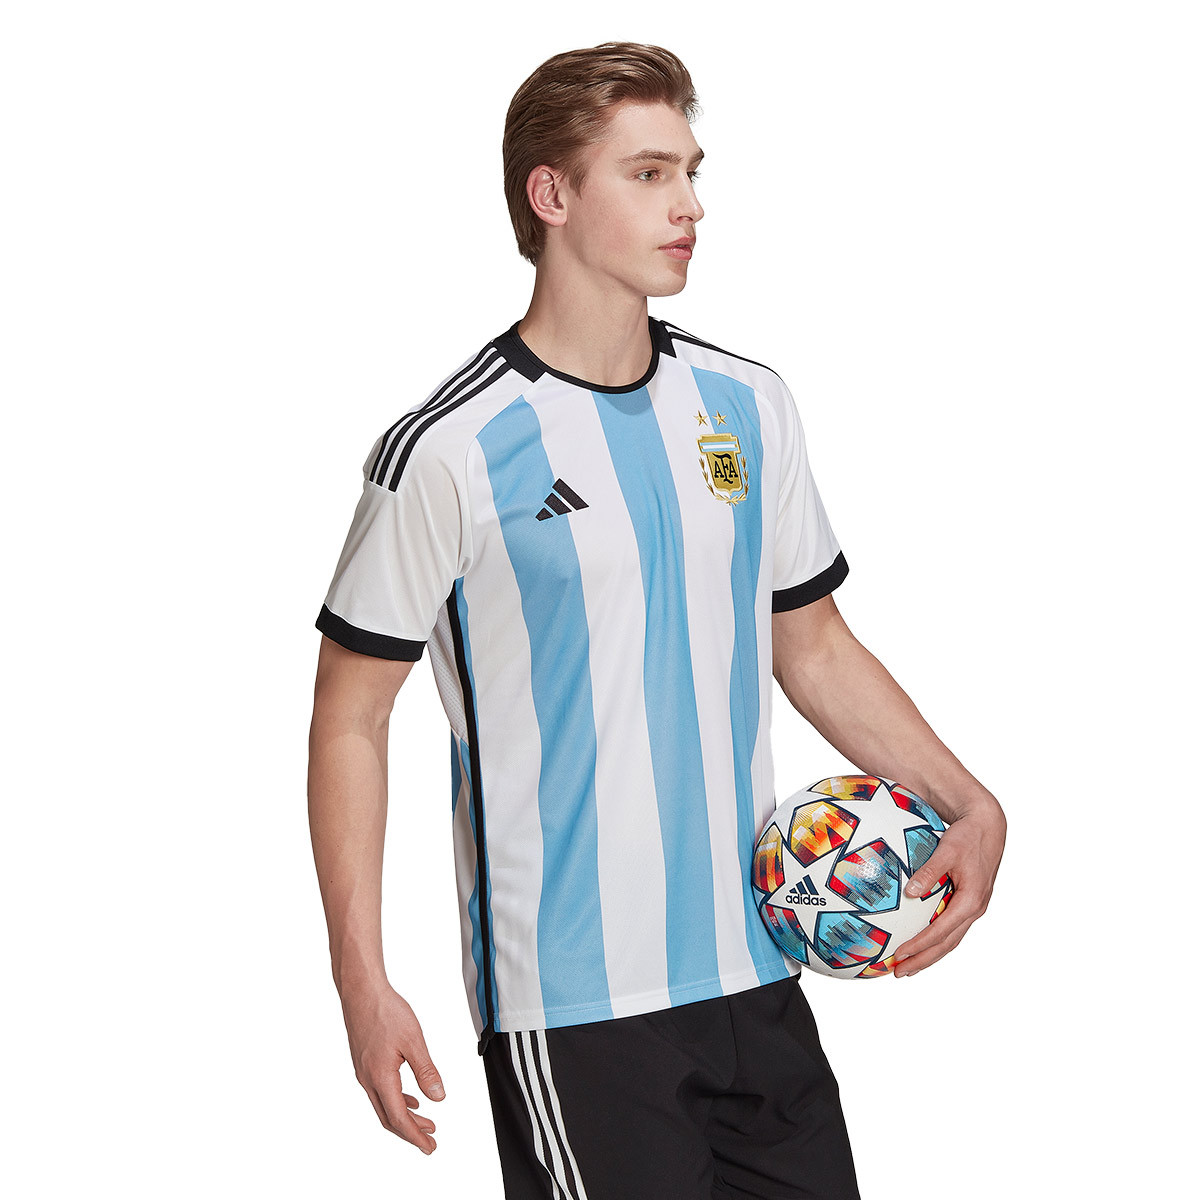 Argentina World Cup 2022 adidas Home Kit - FOOTBALL FASHION